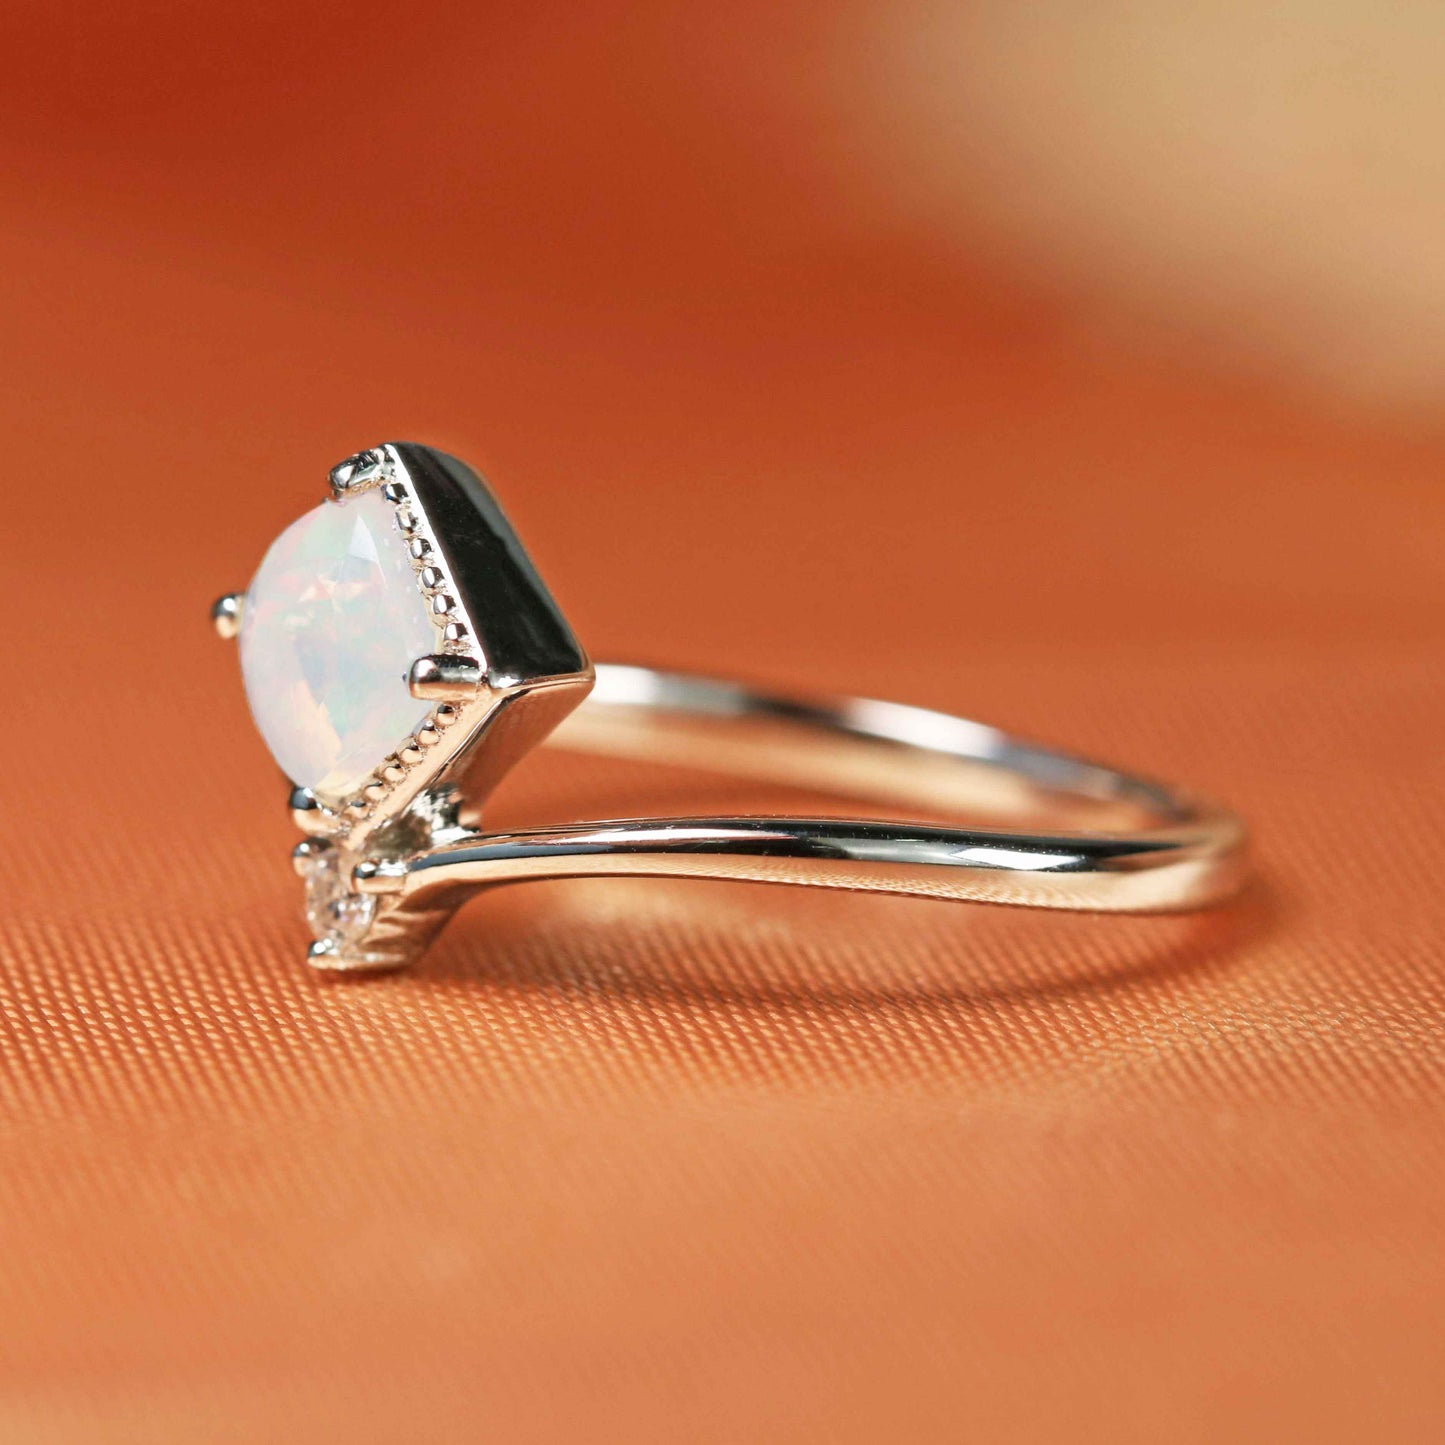 Unique 1 carat square princess cut Fire Opal Engagement Ring in Gold